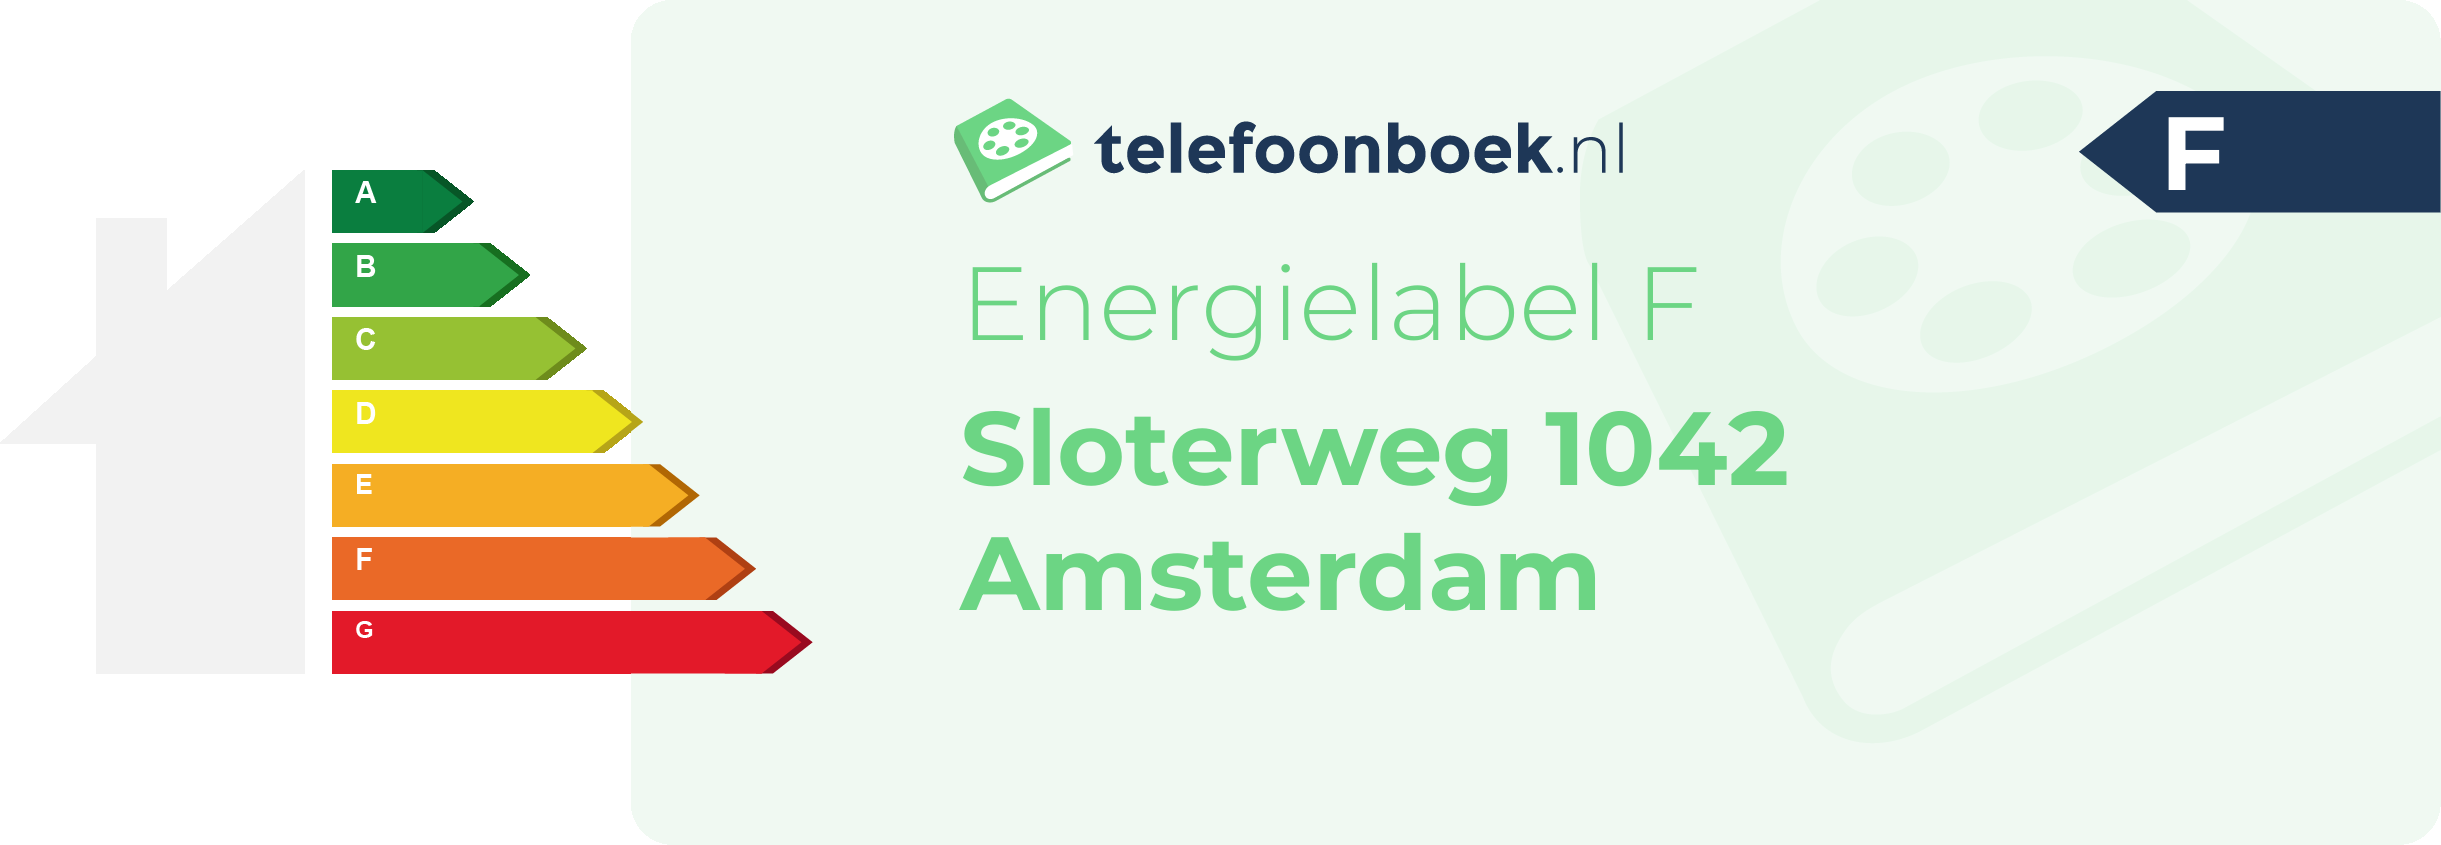 Energielabel Sloterweg 1042 Amsterdam